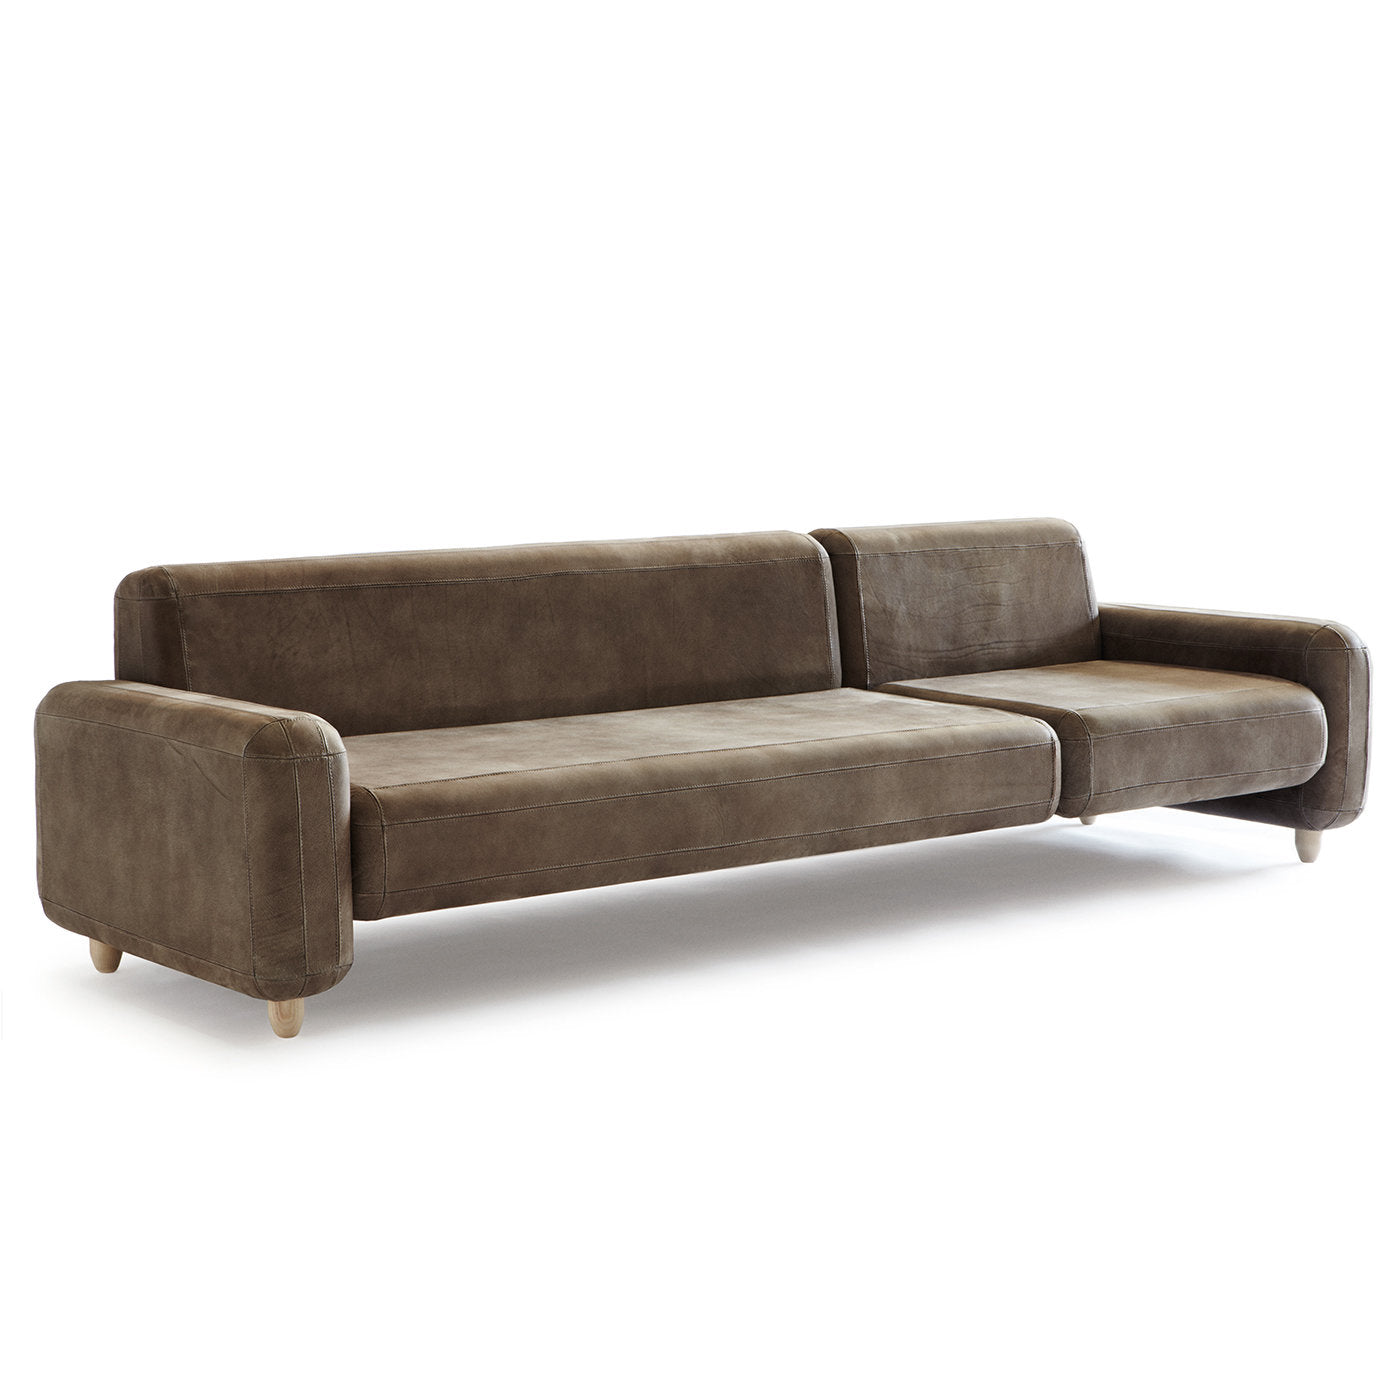 Traco Natural Gray Leather Sofa by Paolo Capello - Alternative view 1